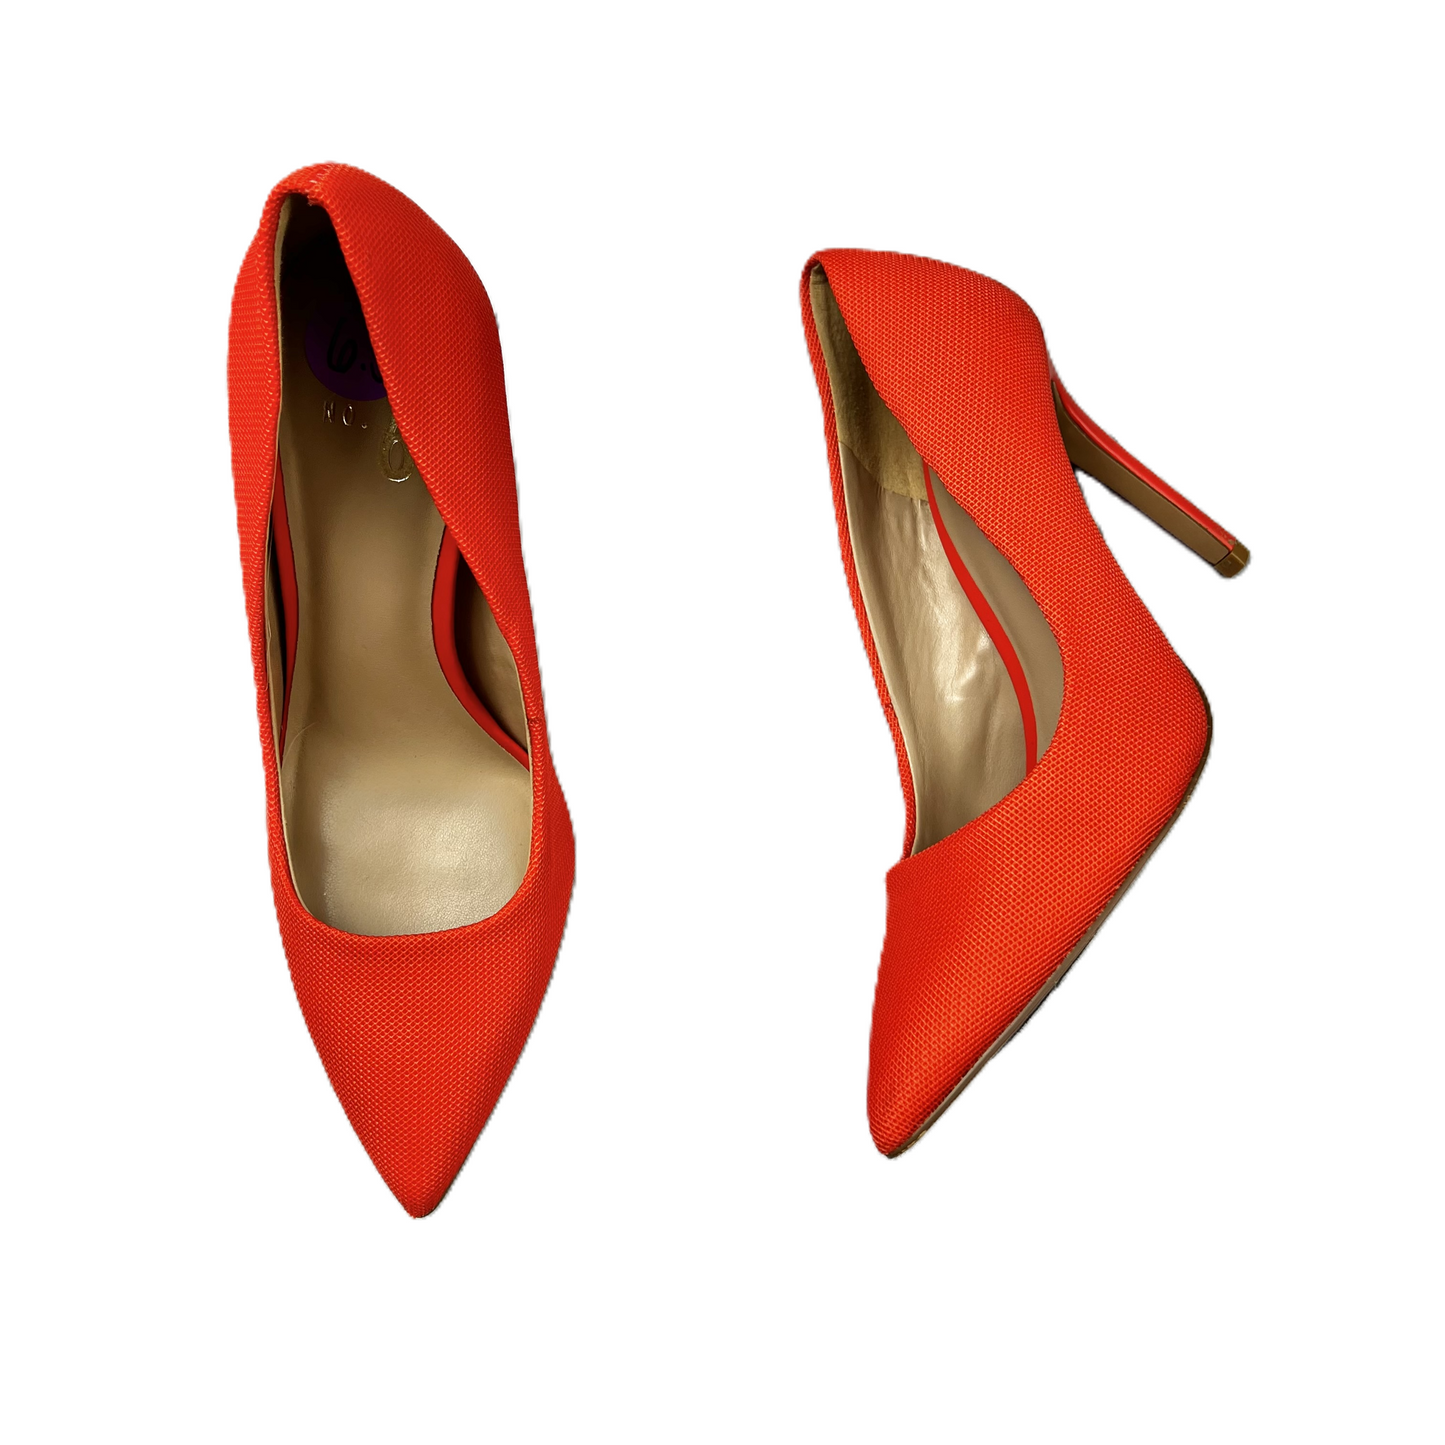 Orange Shoes Heels Stiletto By Mix No 6, Size: 6.5